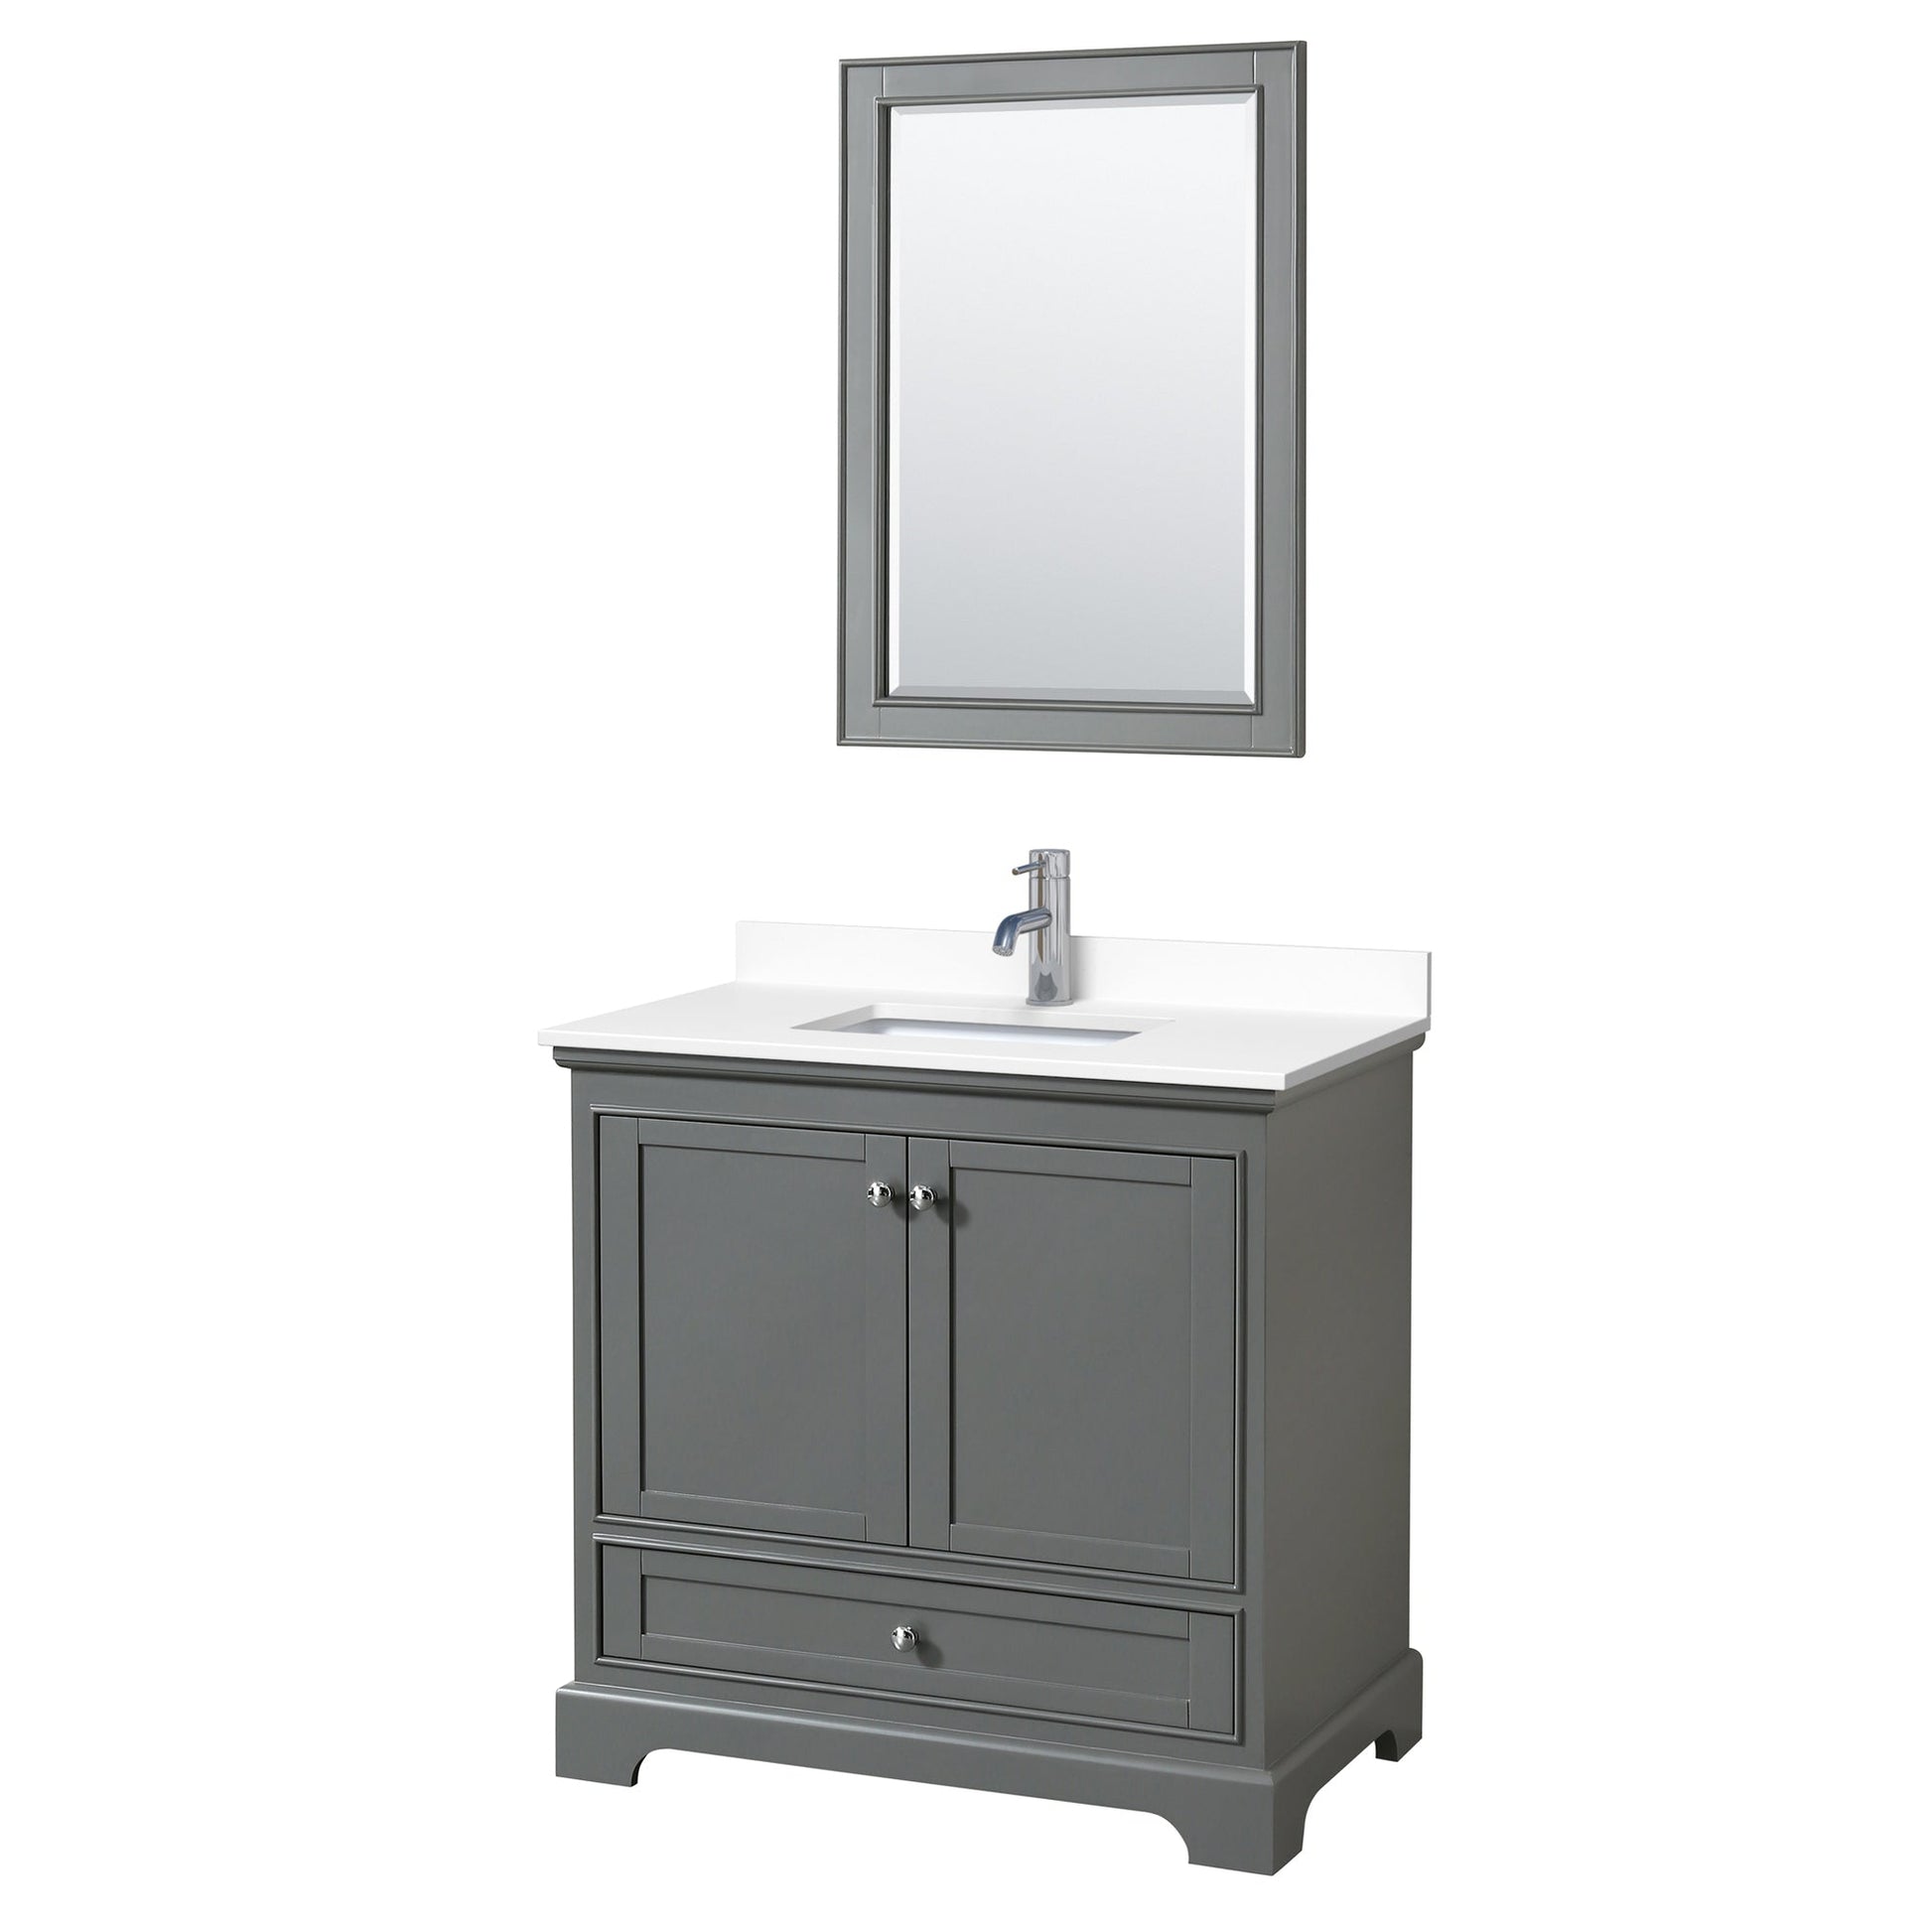 Wyndham Collection Deborah 36" Single Bathroom Vanity in Dark Gray, White Cultured Marble Countertop, Undermount Square Sink, 24" Mirror